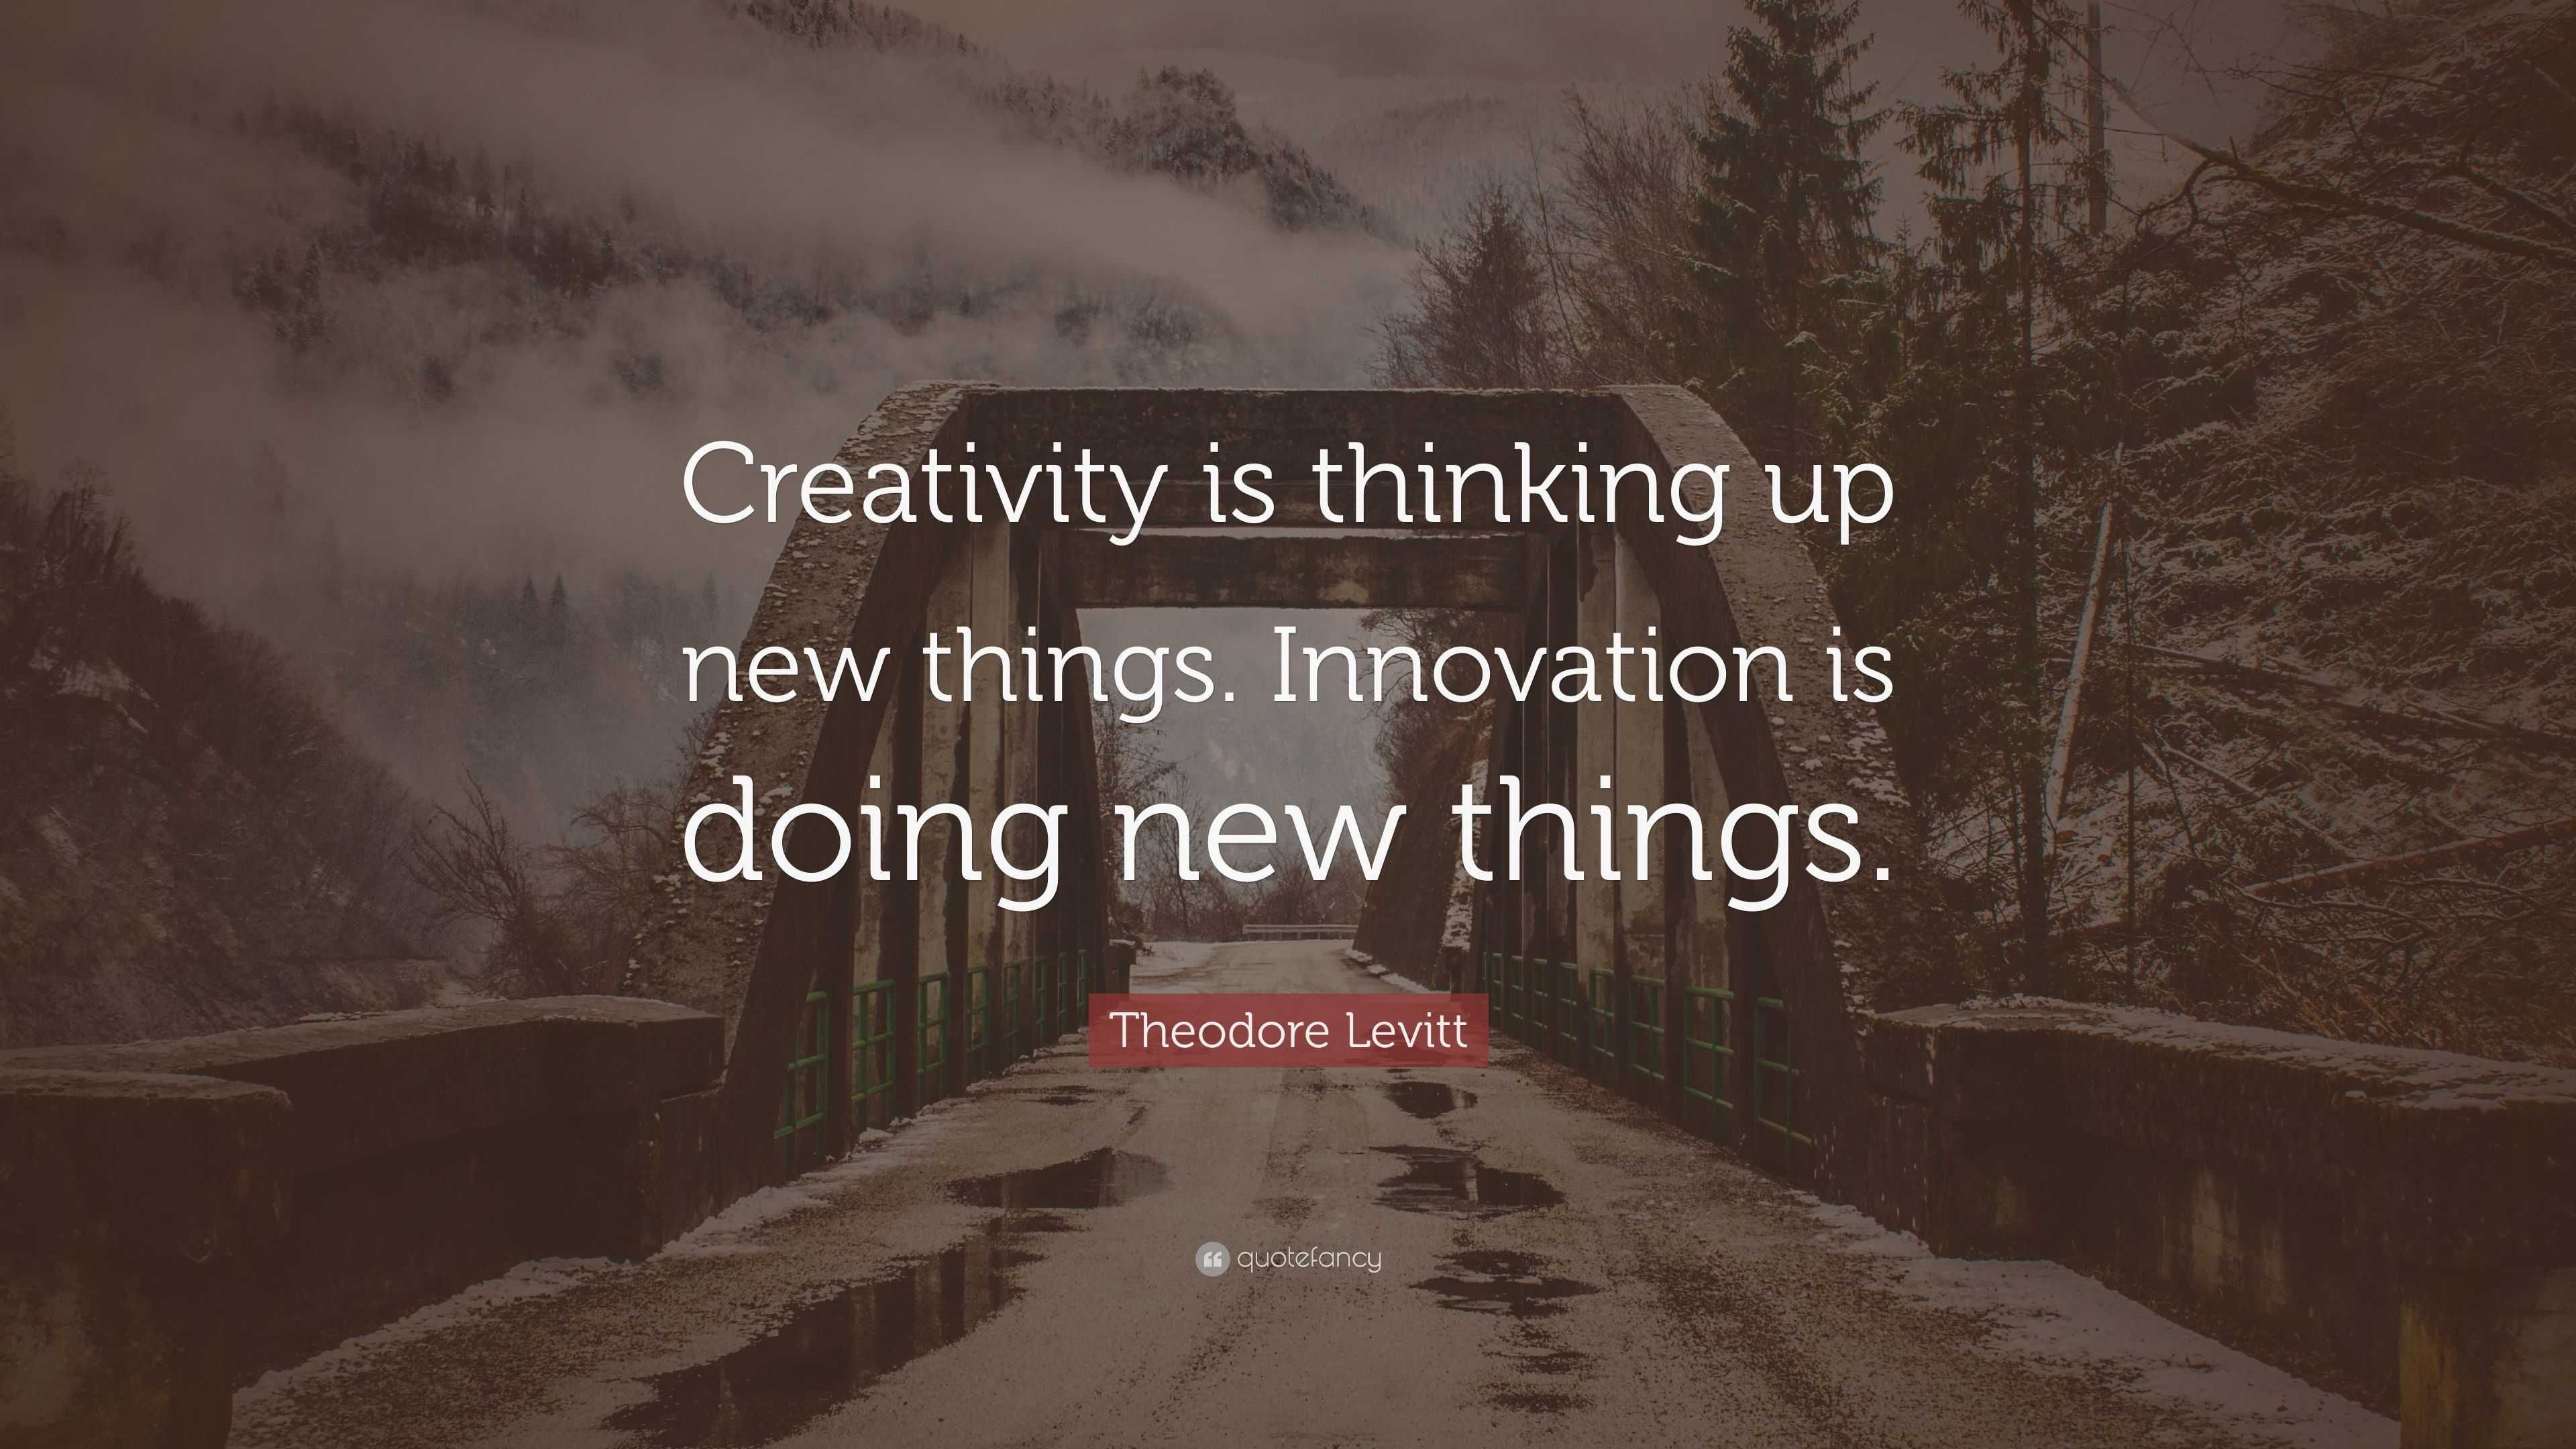 Theodore Levitt Quote: “Creativity is thinking up new things